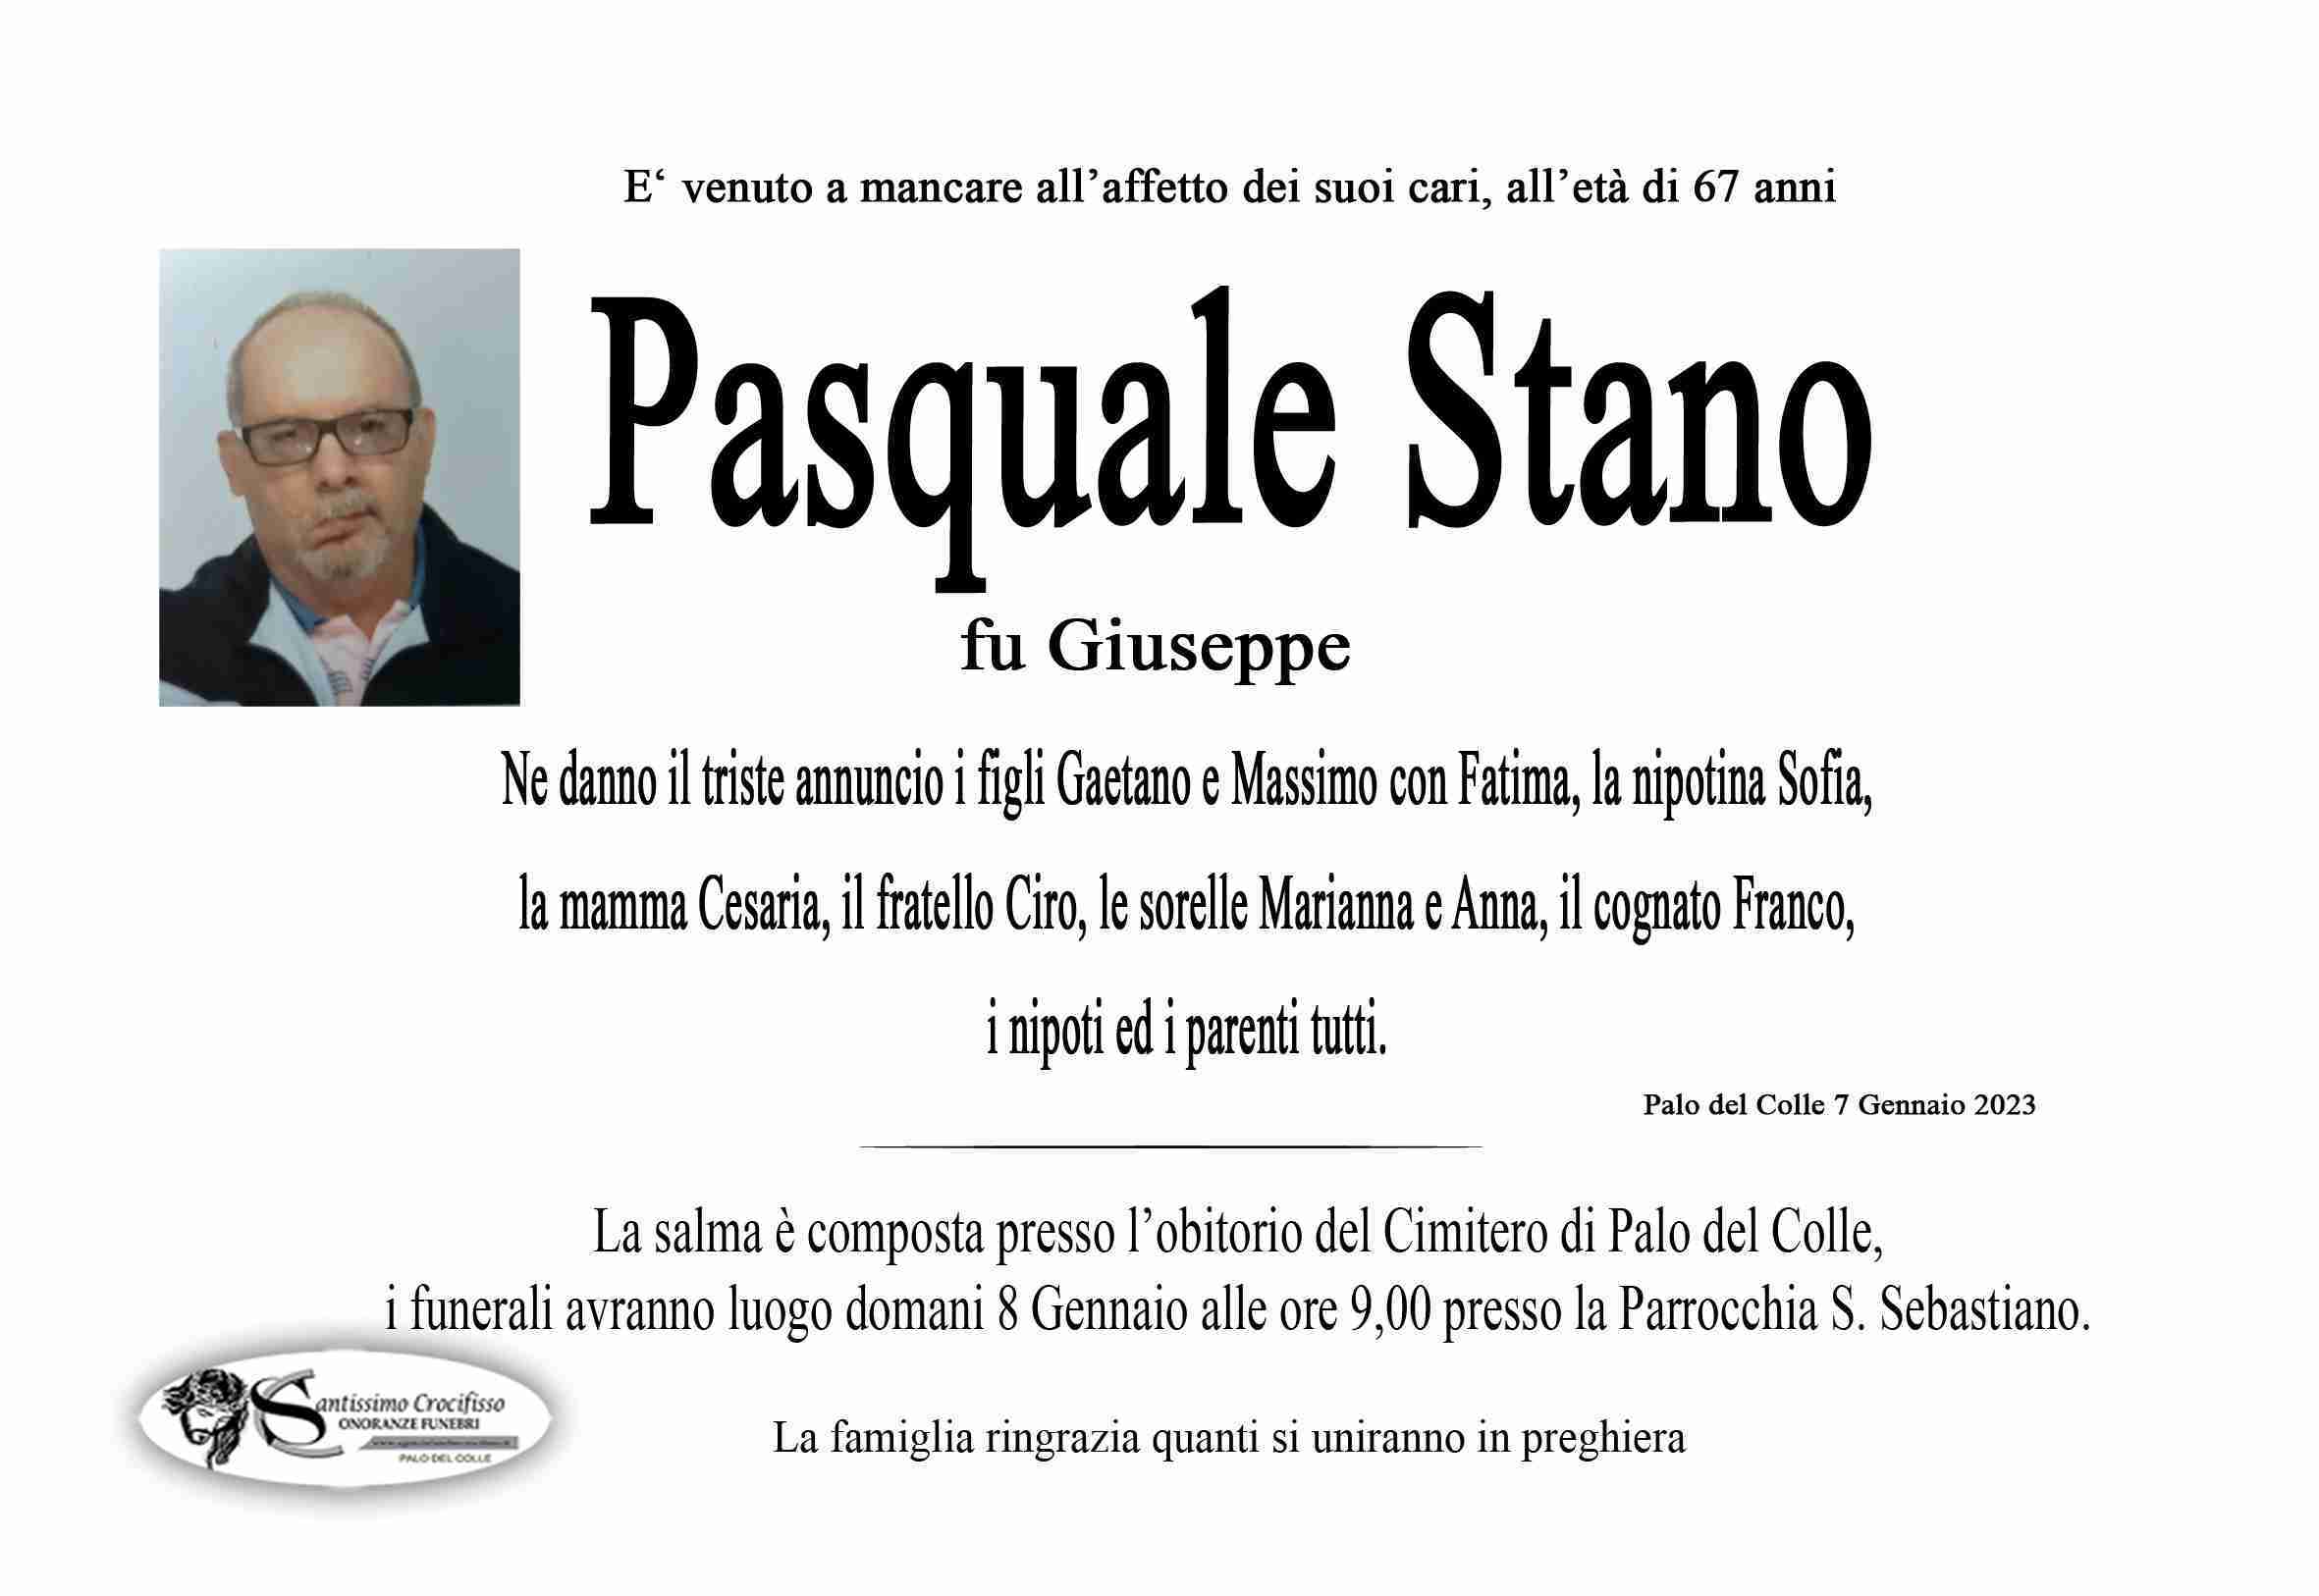 Pasquale Stano